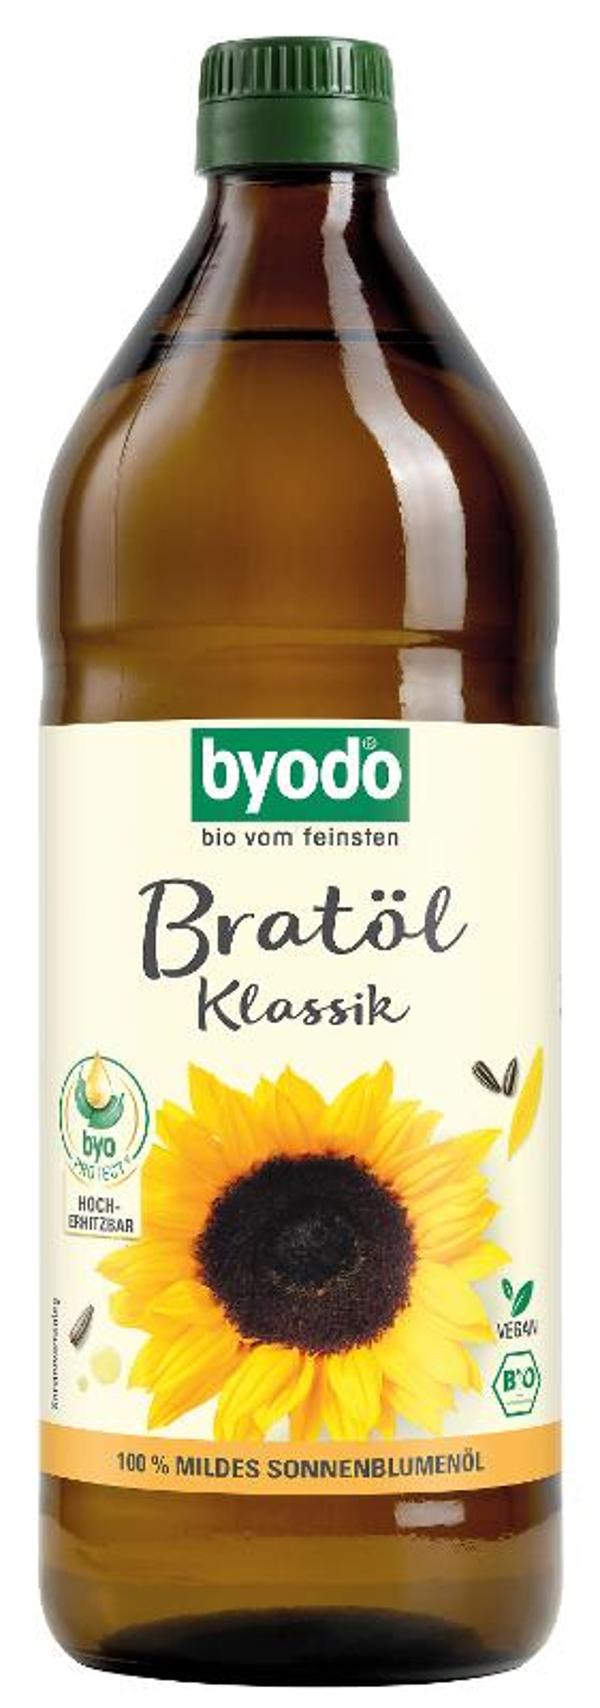 Produktfoto zu Bratöl Klassik Sonnenblumenöl